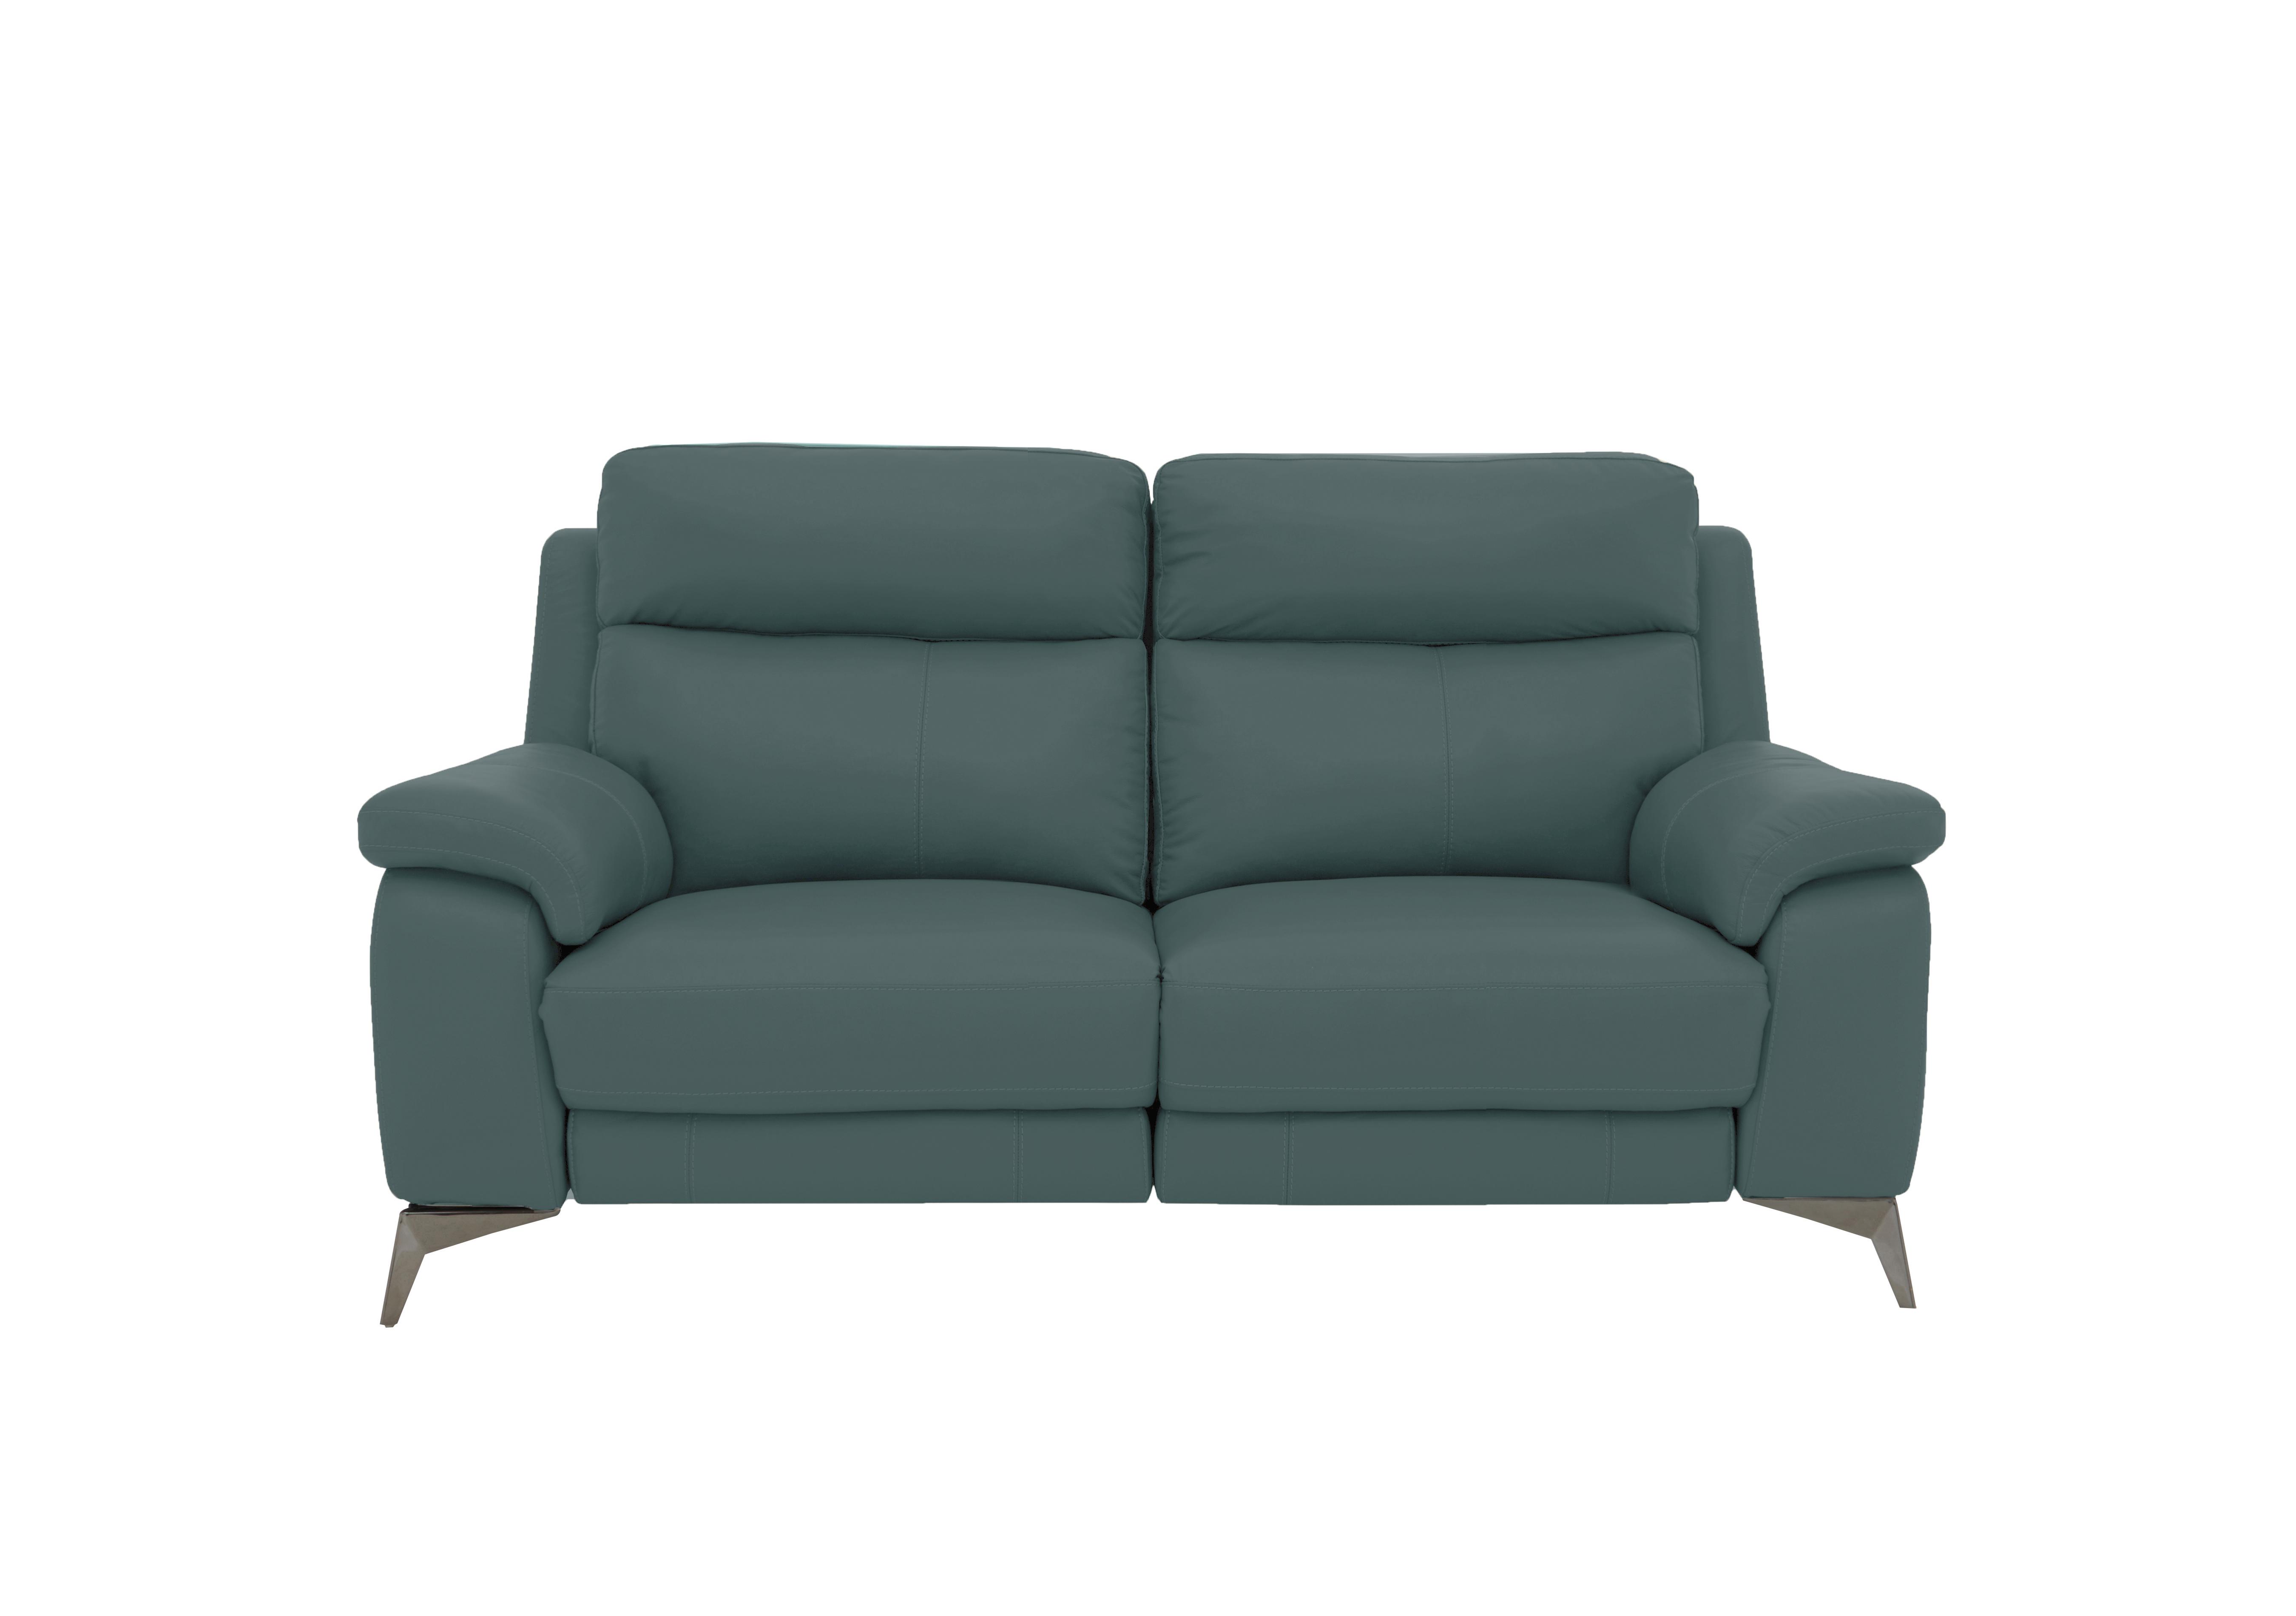 Missouri 2 Seater Leather Sofa in Bv-301e Lake Green on Furniture Village